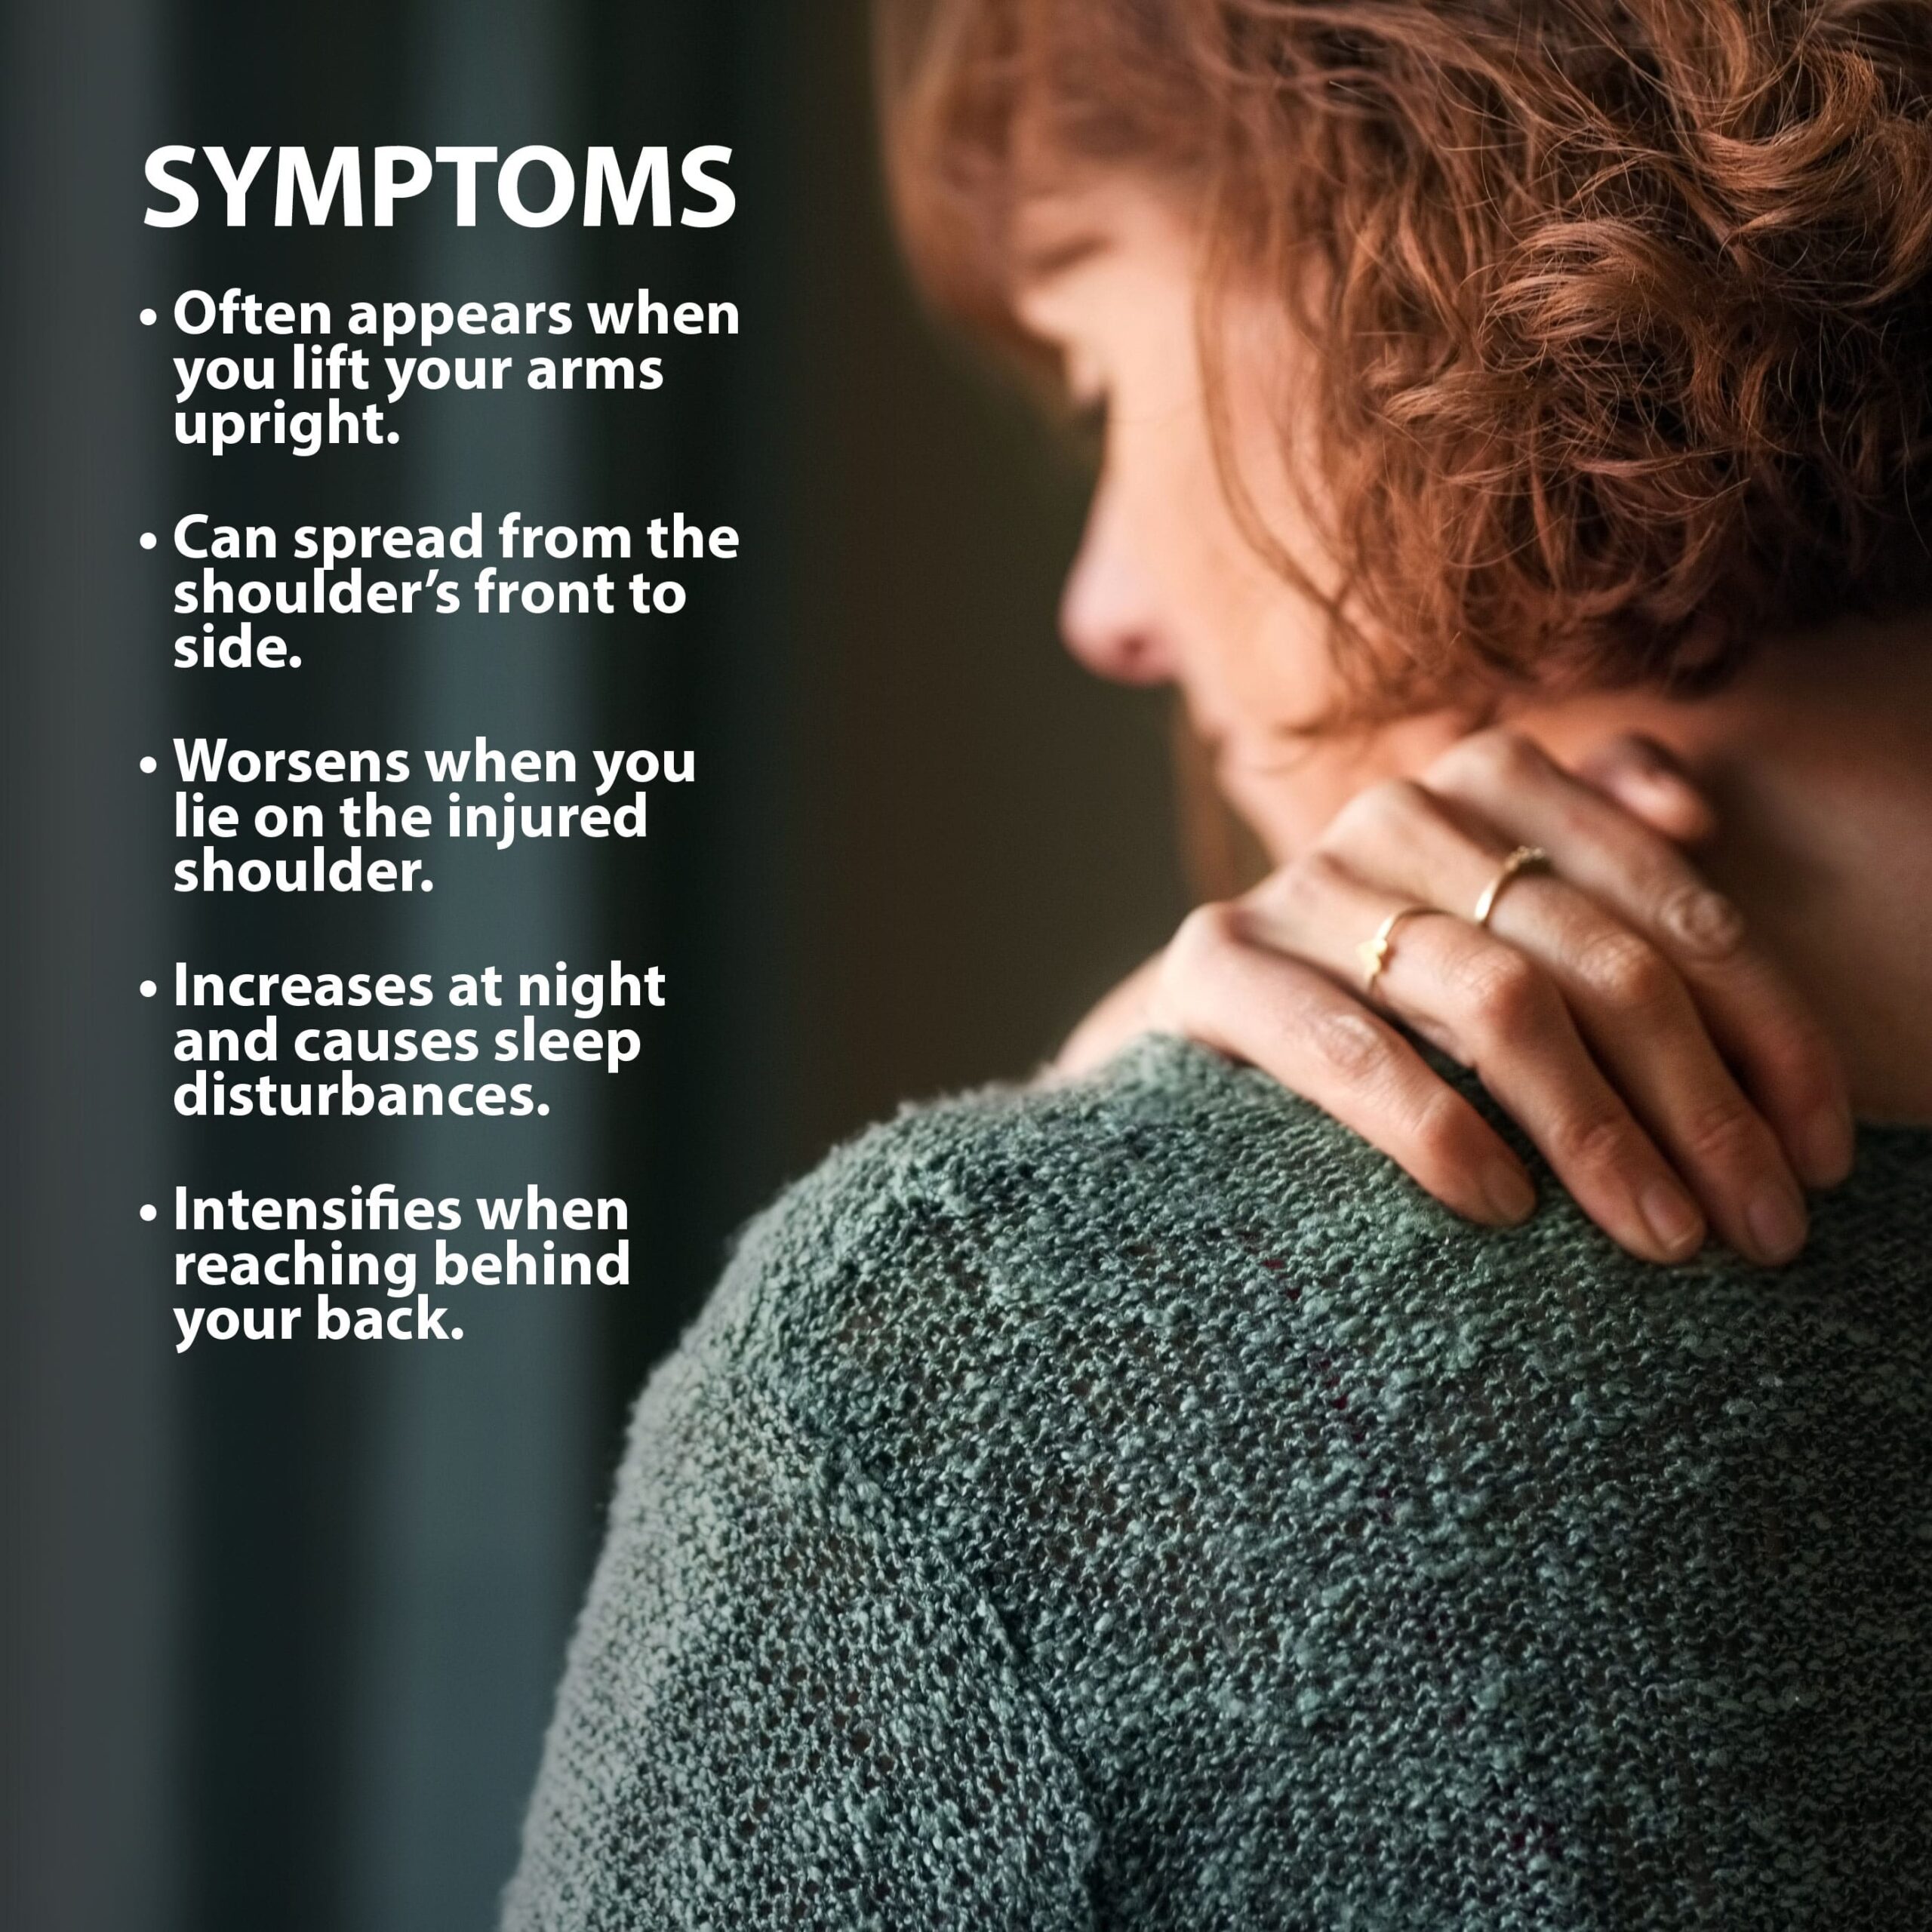 symptoms of shoulder impingements that may result in shoulder impingement surgery